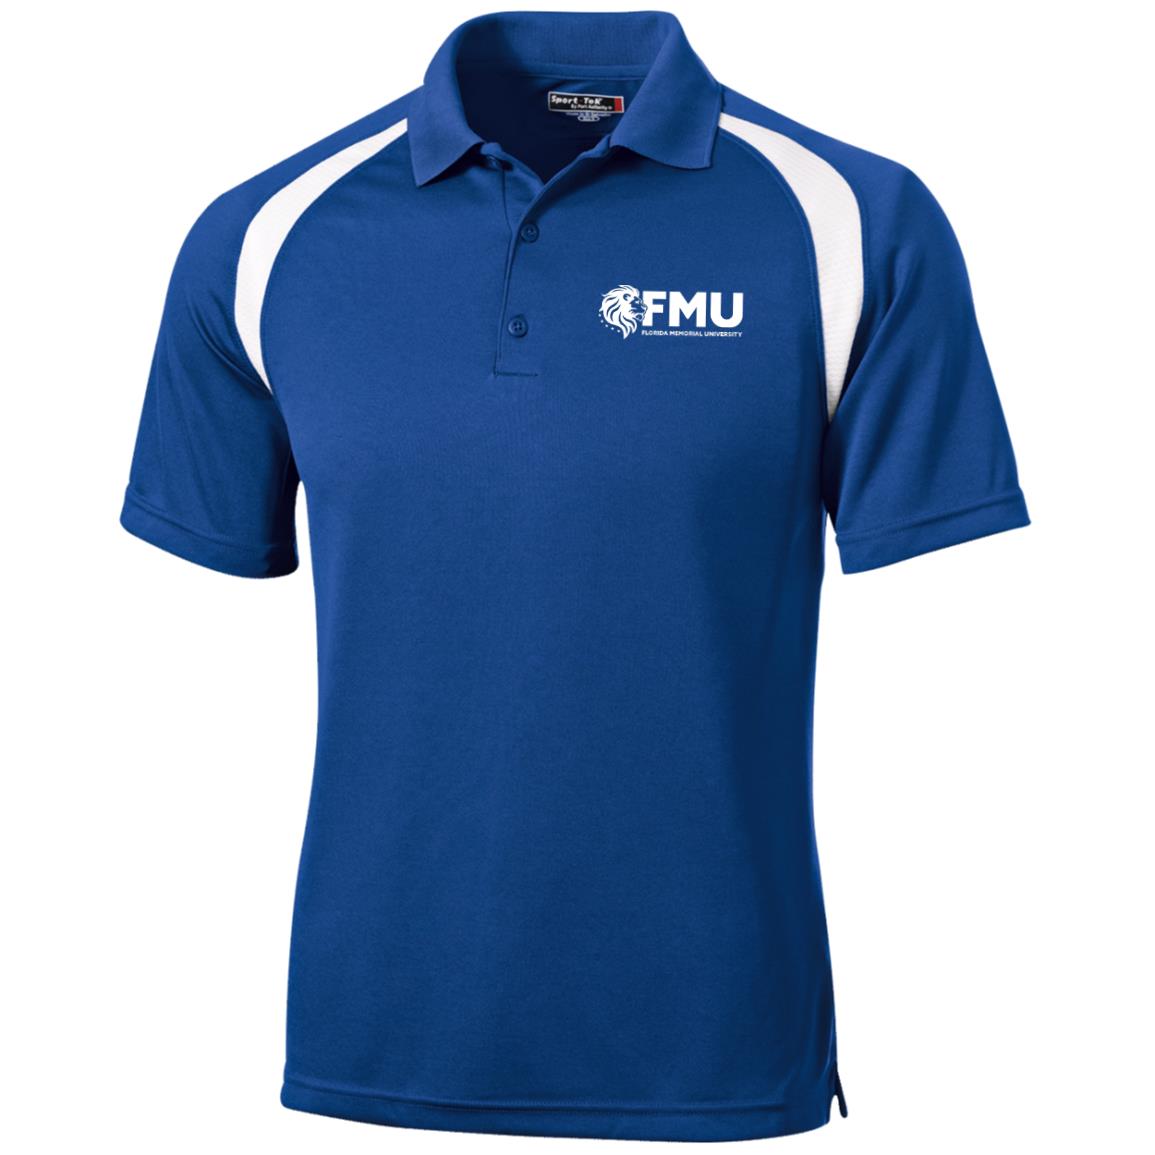 FMU Moisture-Wicking Tag-Free Golf Shirt